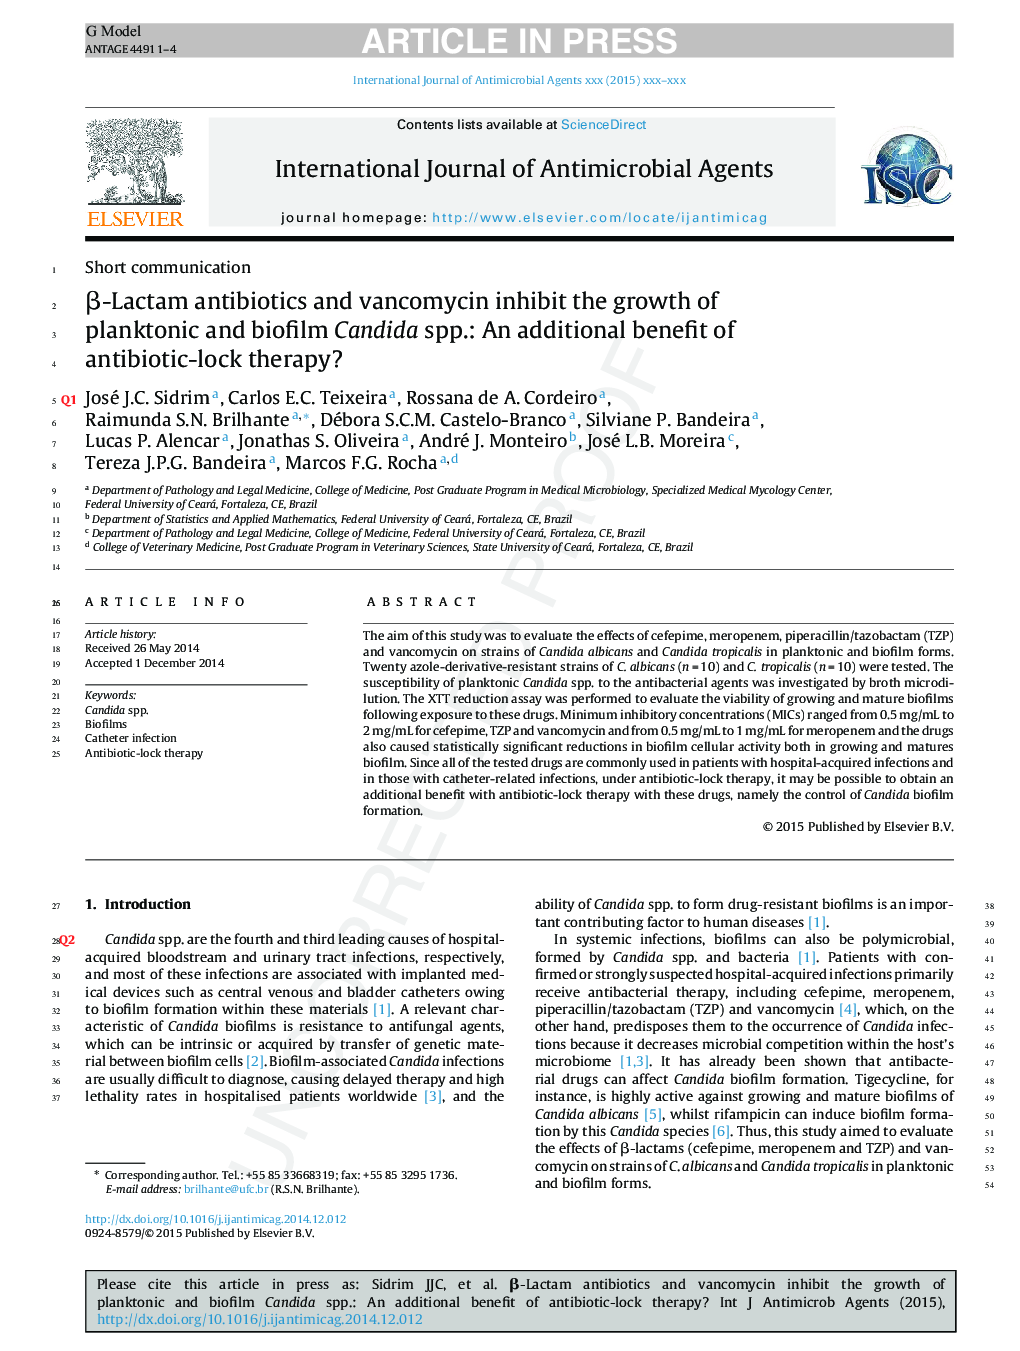 Î²-Lactam antibiotics and vancomycin inhibit the growth of planktonic and biofilm Candida spp.: An additional benefit of antibiotic-lock therapy?